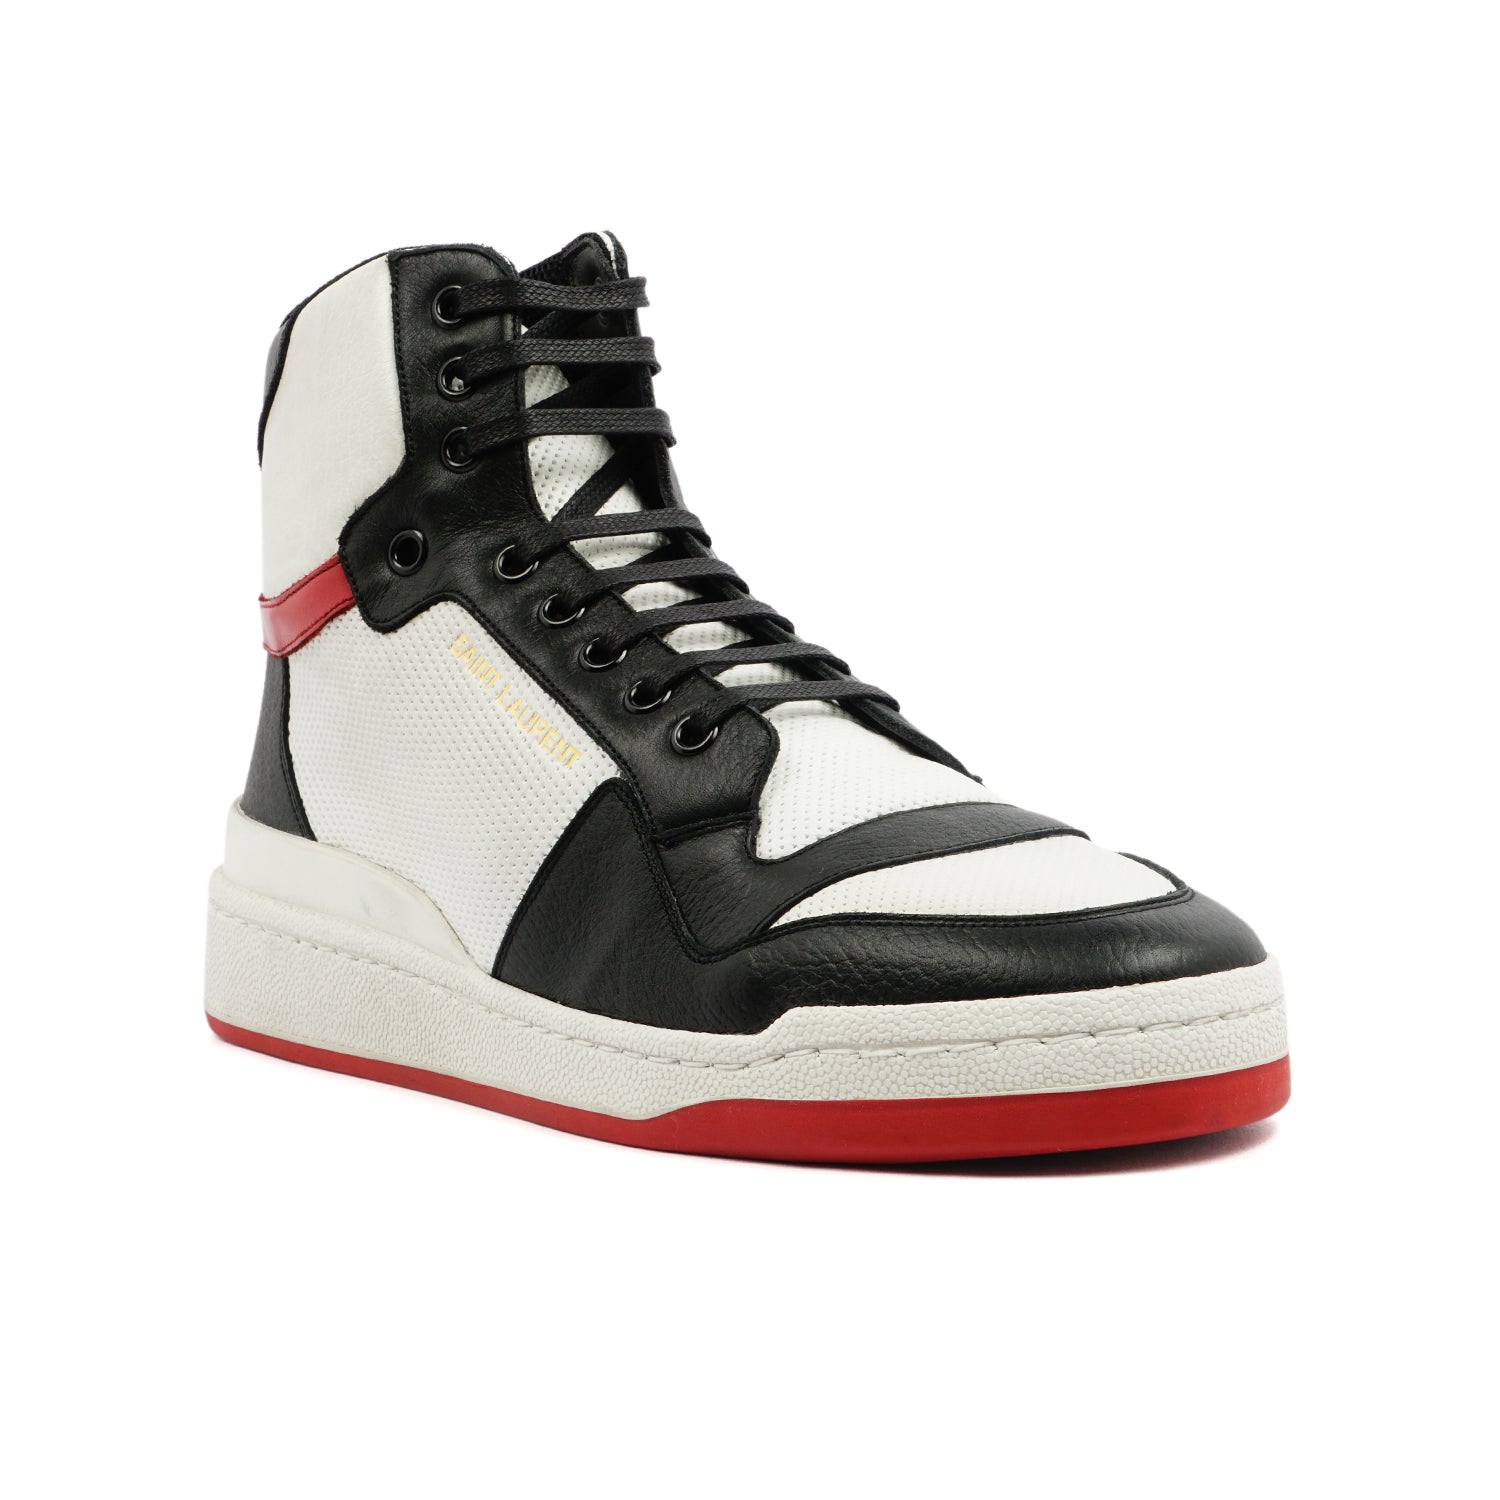 Buy Saint Laurent Men's Tan Brown Suede High Top Sneakers Shoes, Brown, US  6 / EU 39 at Amazon.in